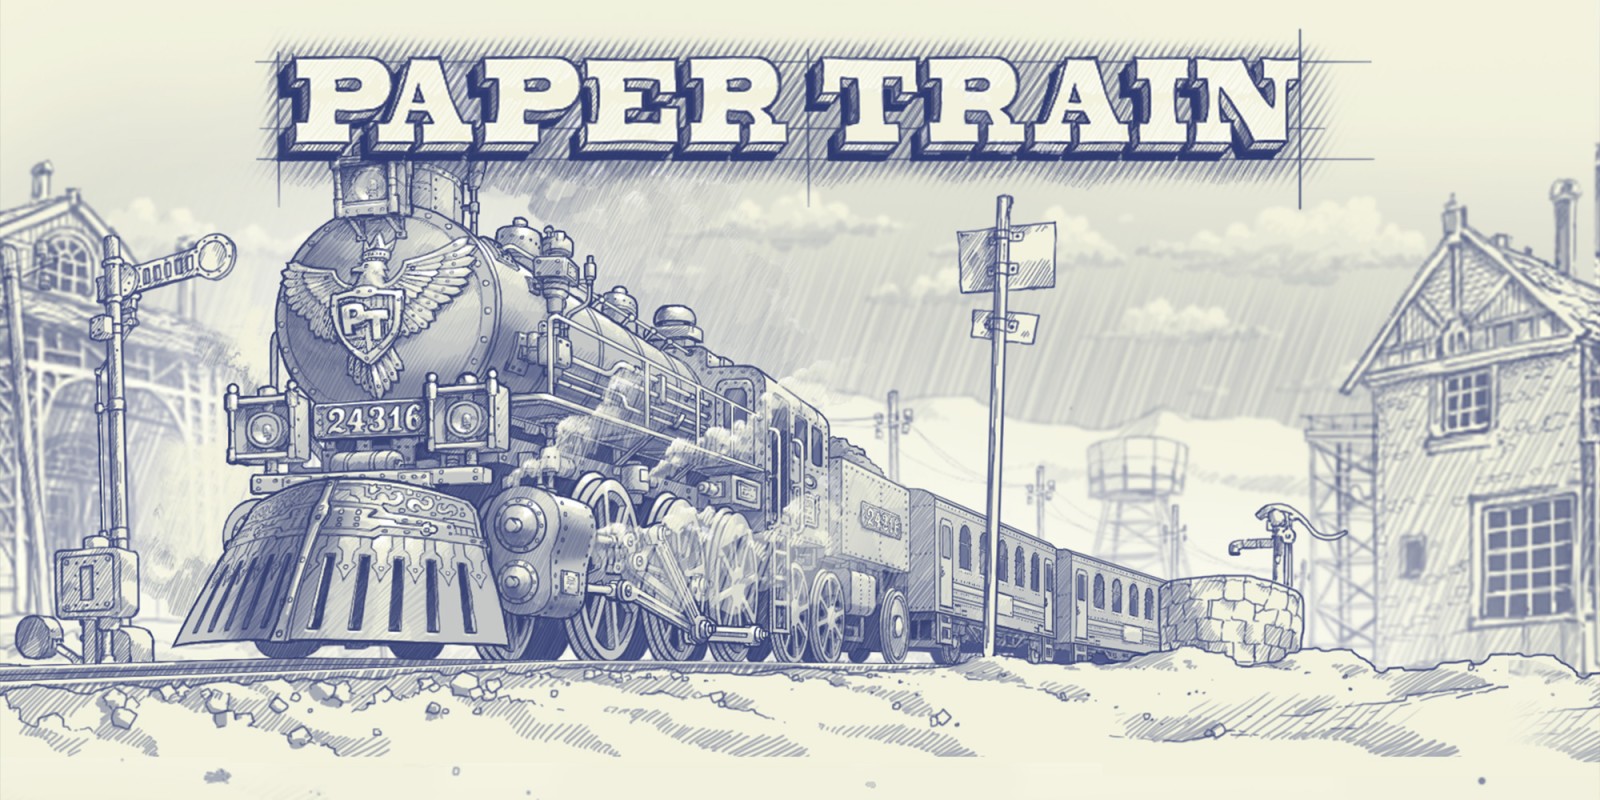 Paper Train